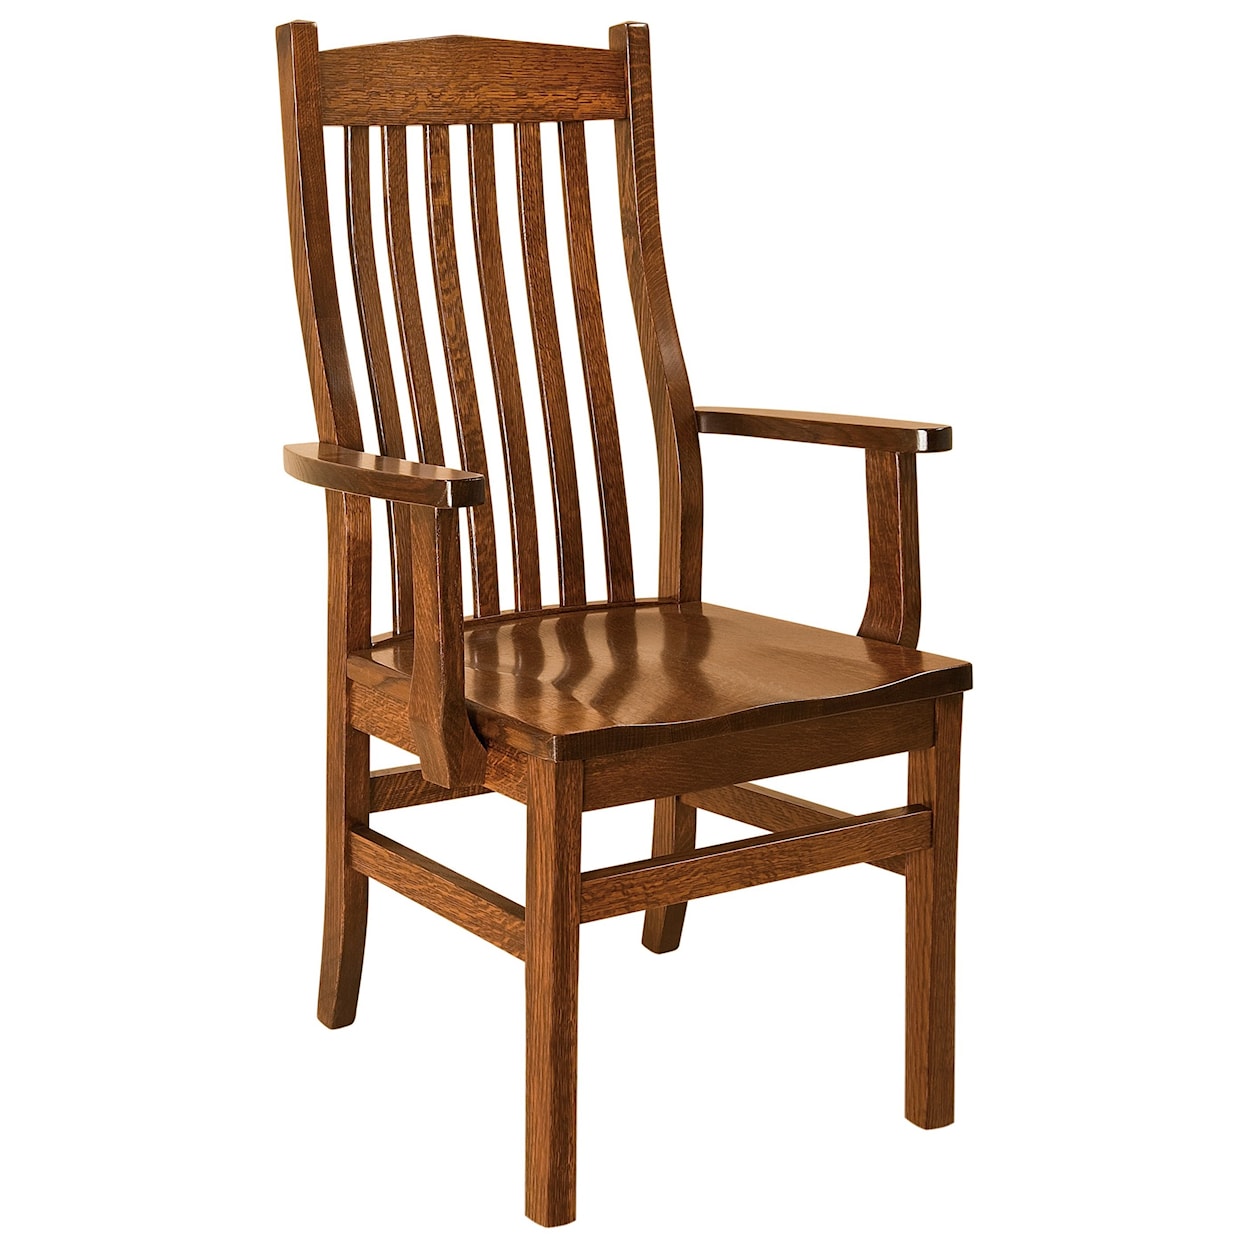 F&N Woodworking Sullivan Arm Chair - Wood Seat